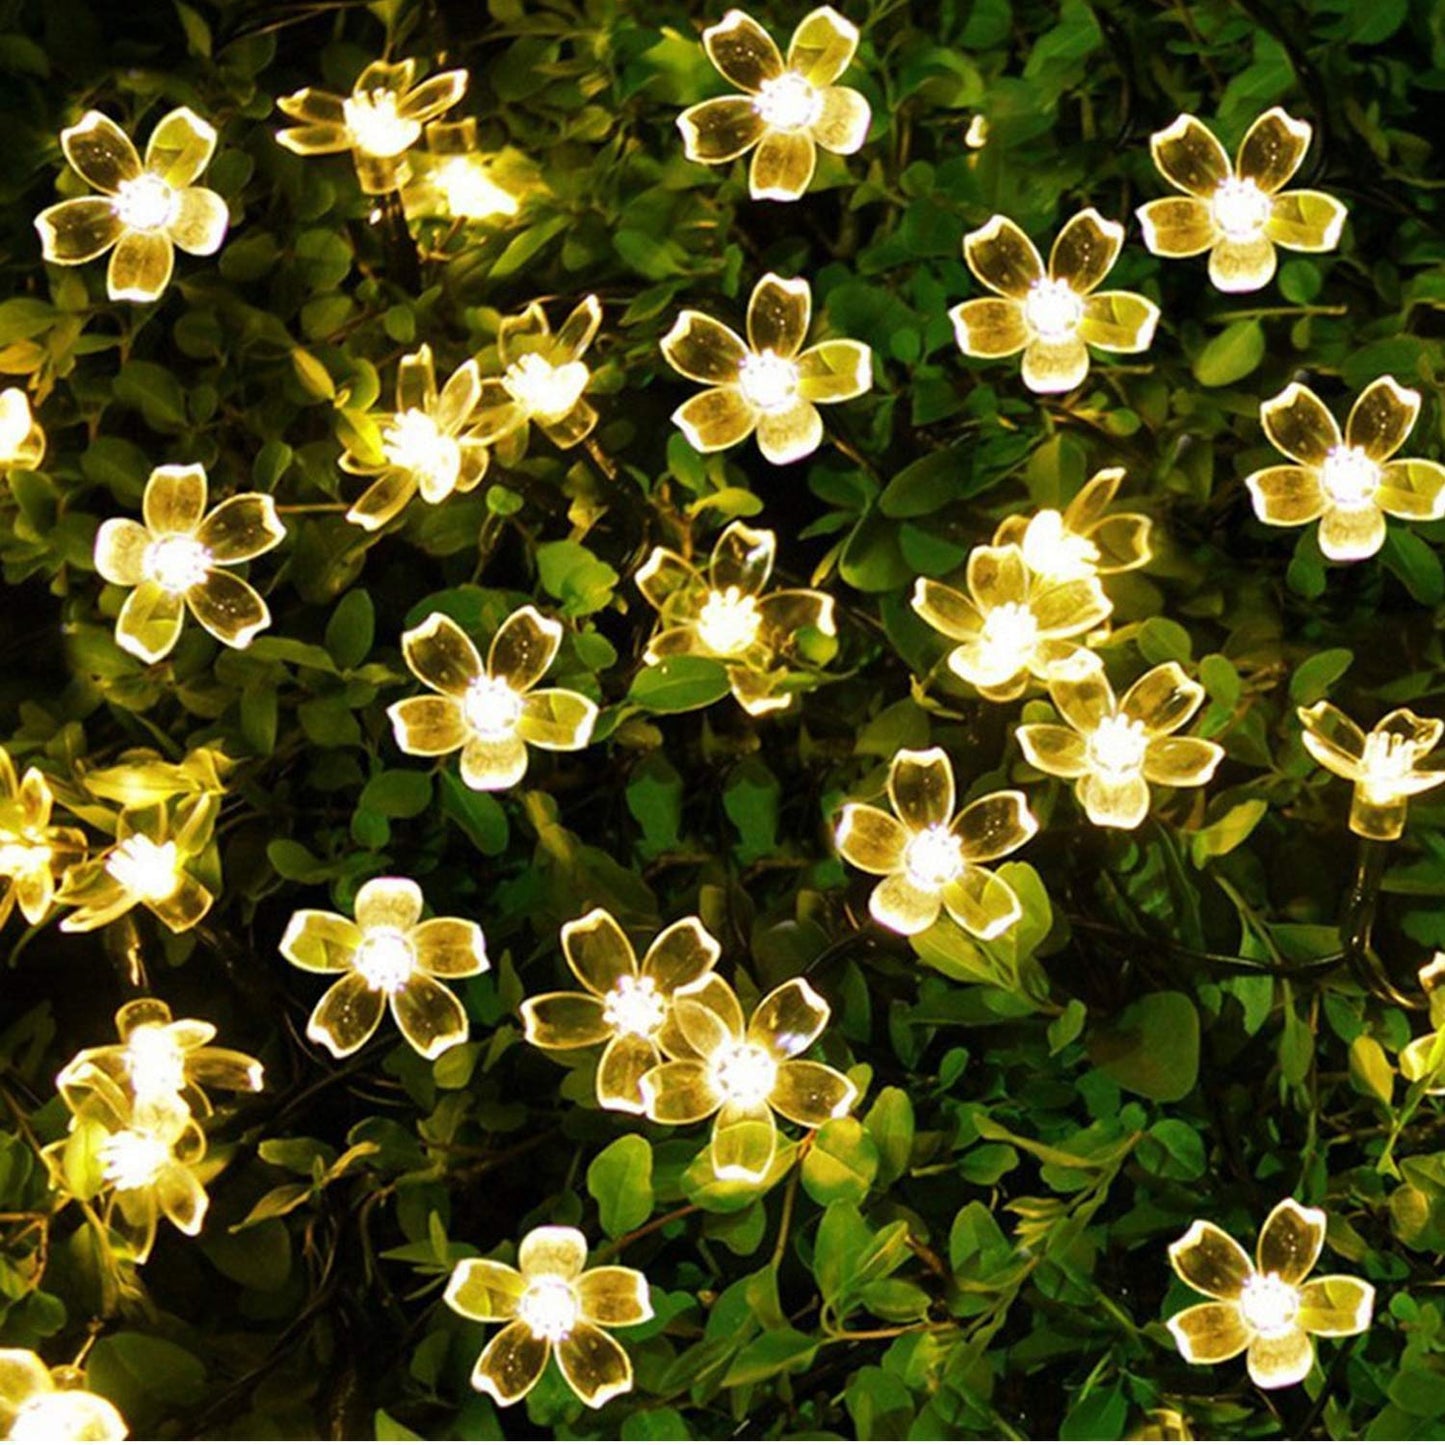 Flexible LED Flower Lights for Home Decoration Waterproof Flower Fairy Lights (16 LED, 14 Feet, Warm White)